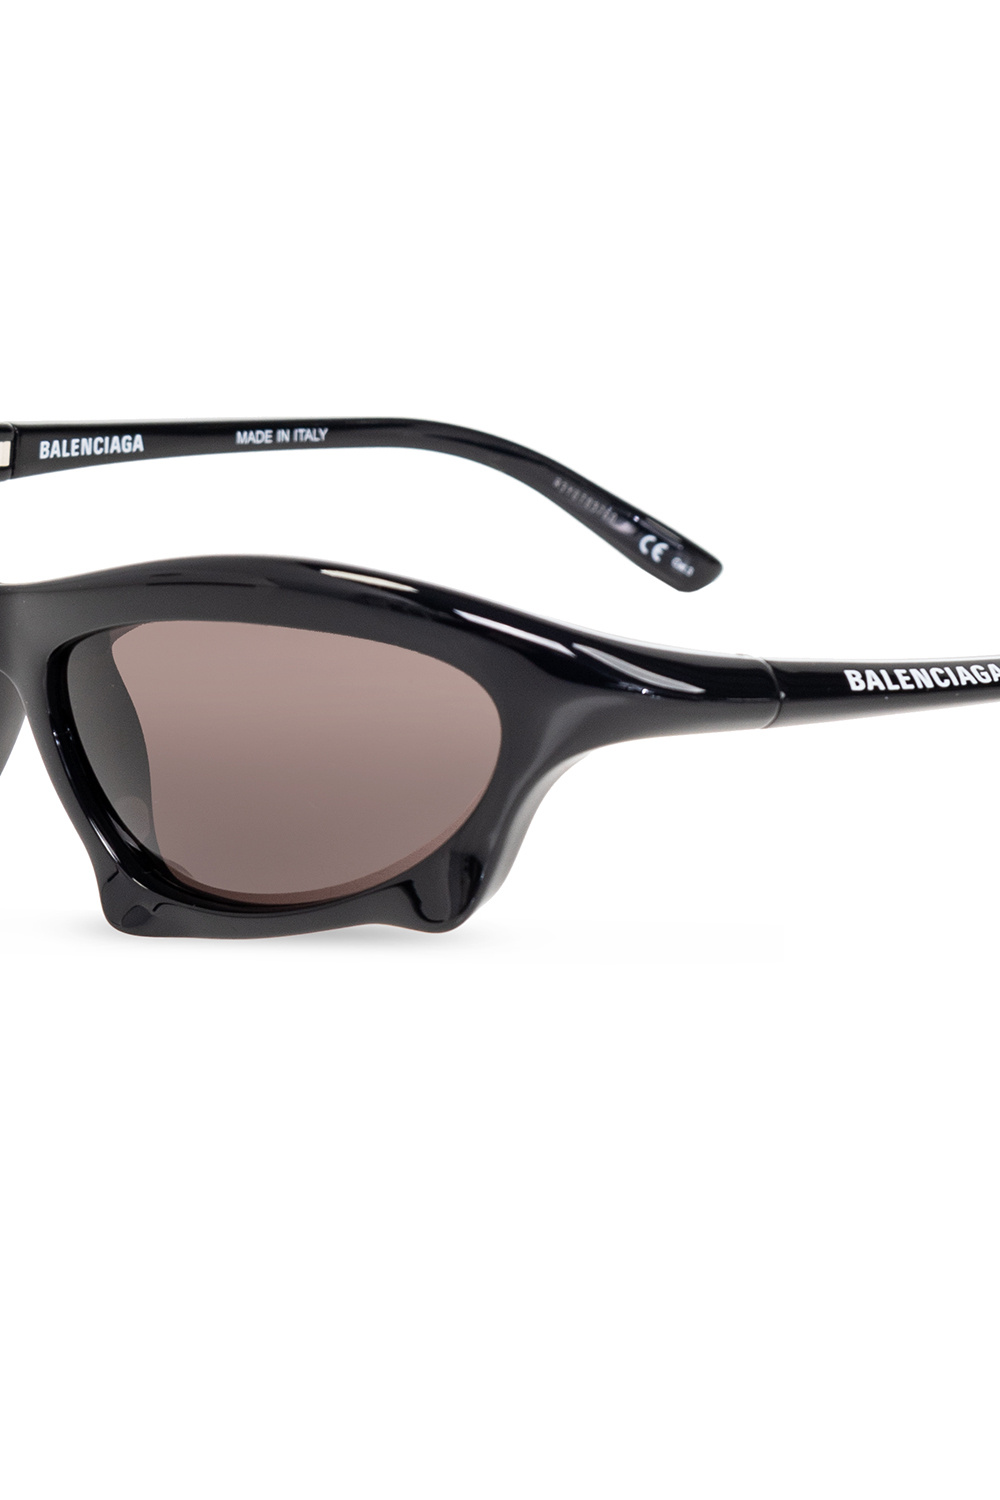 Balenciaga 'Bat Rectangle' sunglasses | Women's Accessories | Vitkac